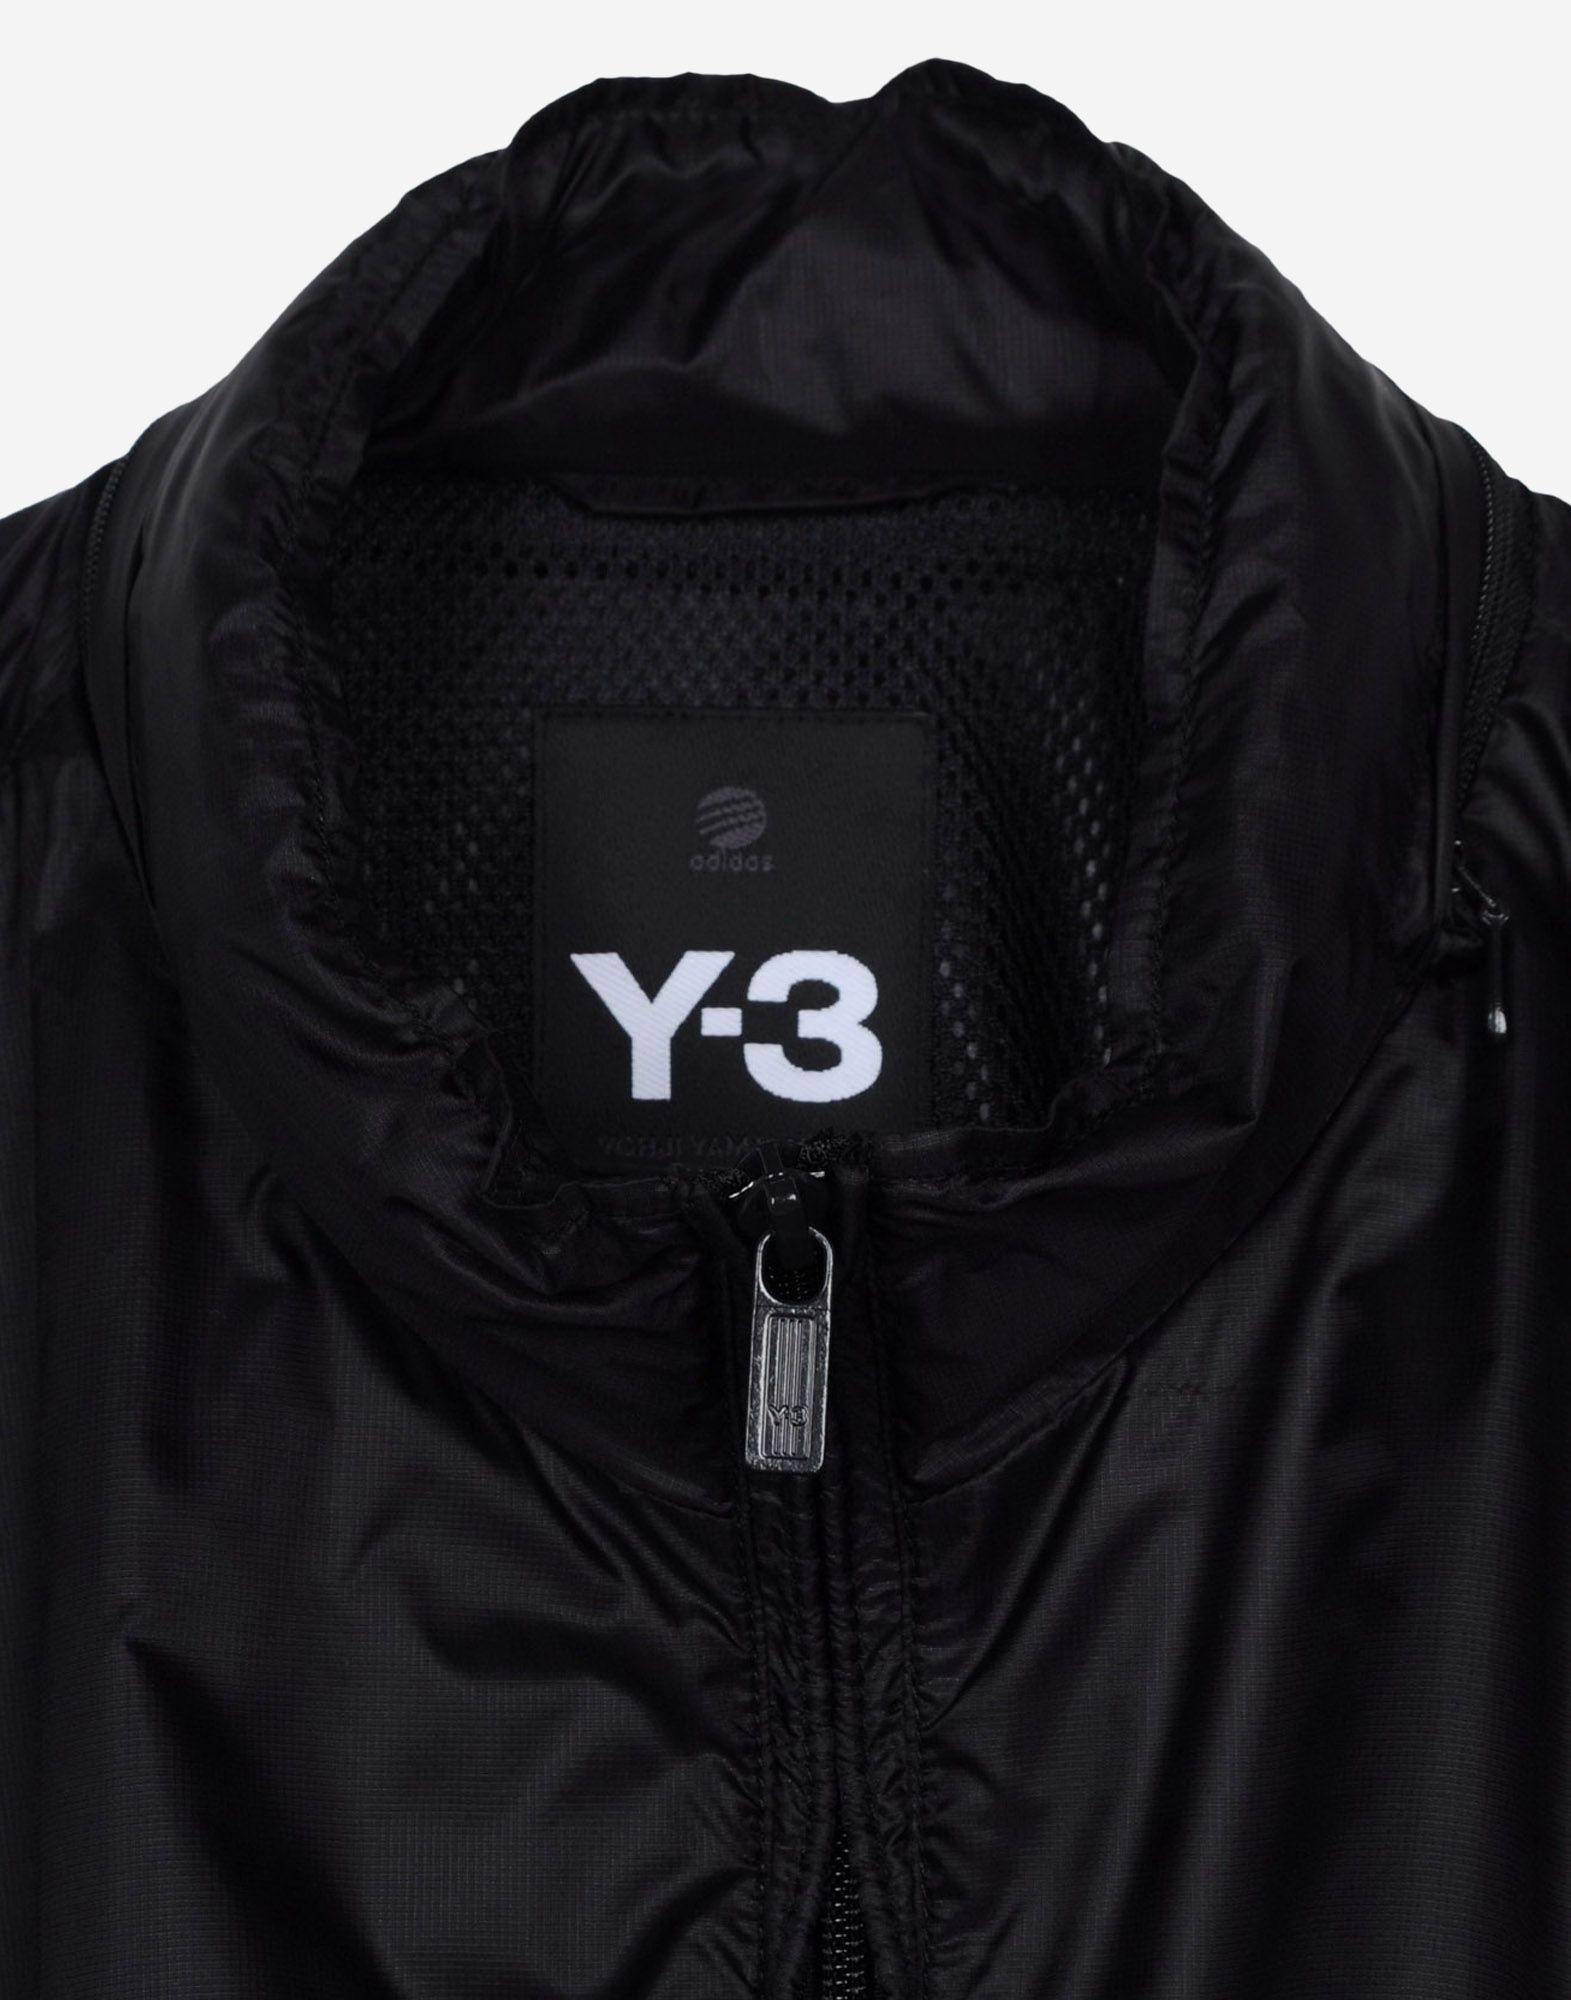 y3 windbreaker jacket